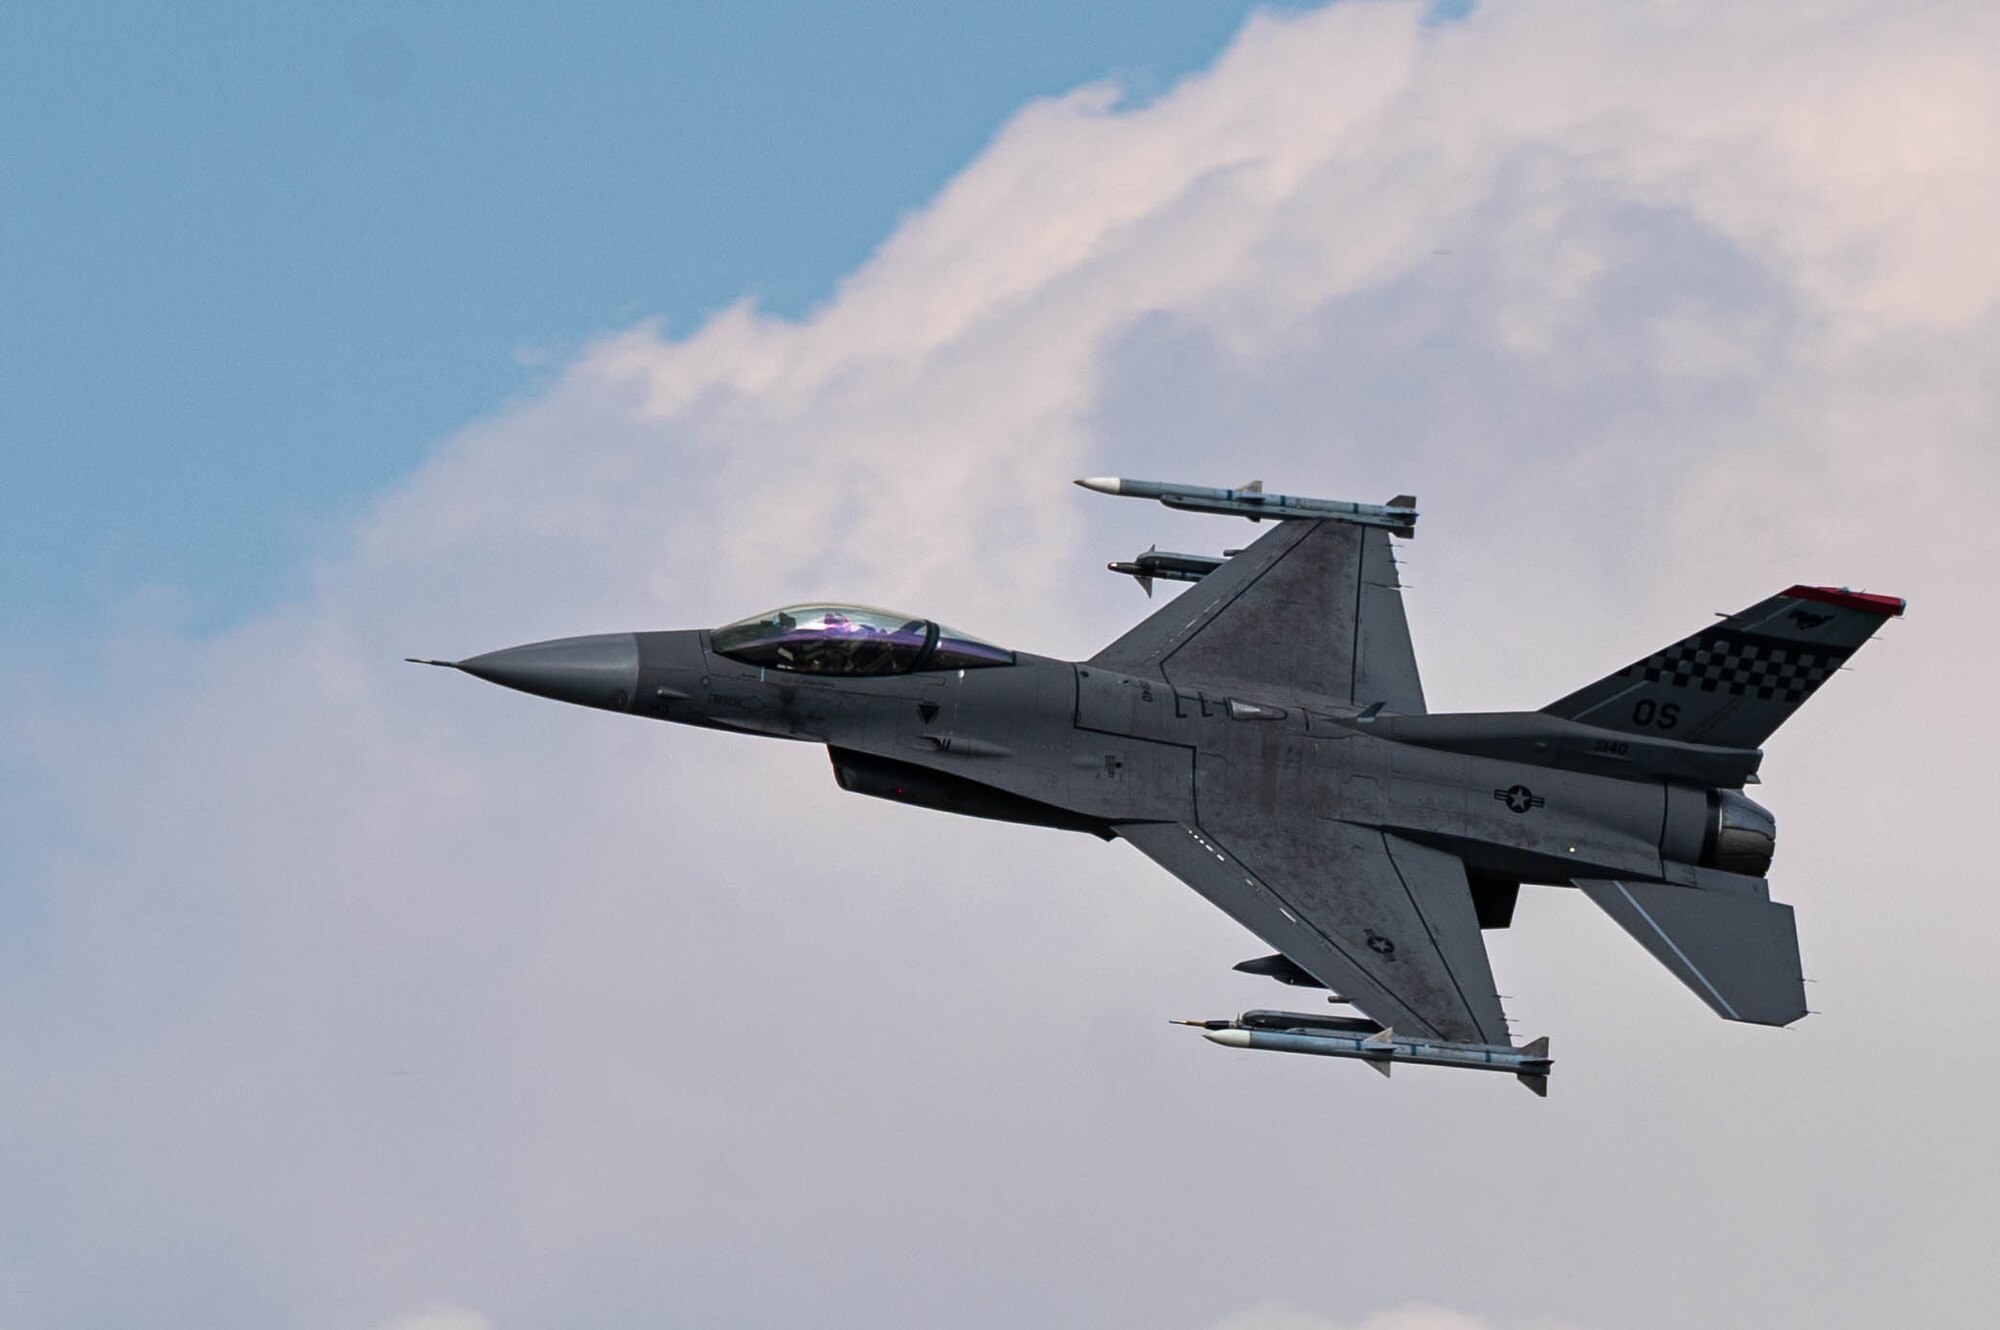 An F-16 takes flight over Osan Air Base